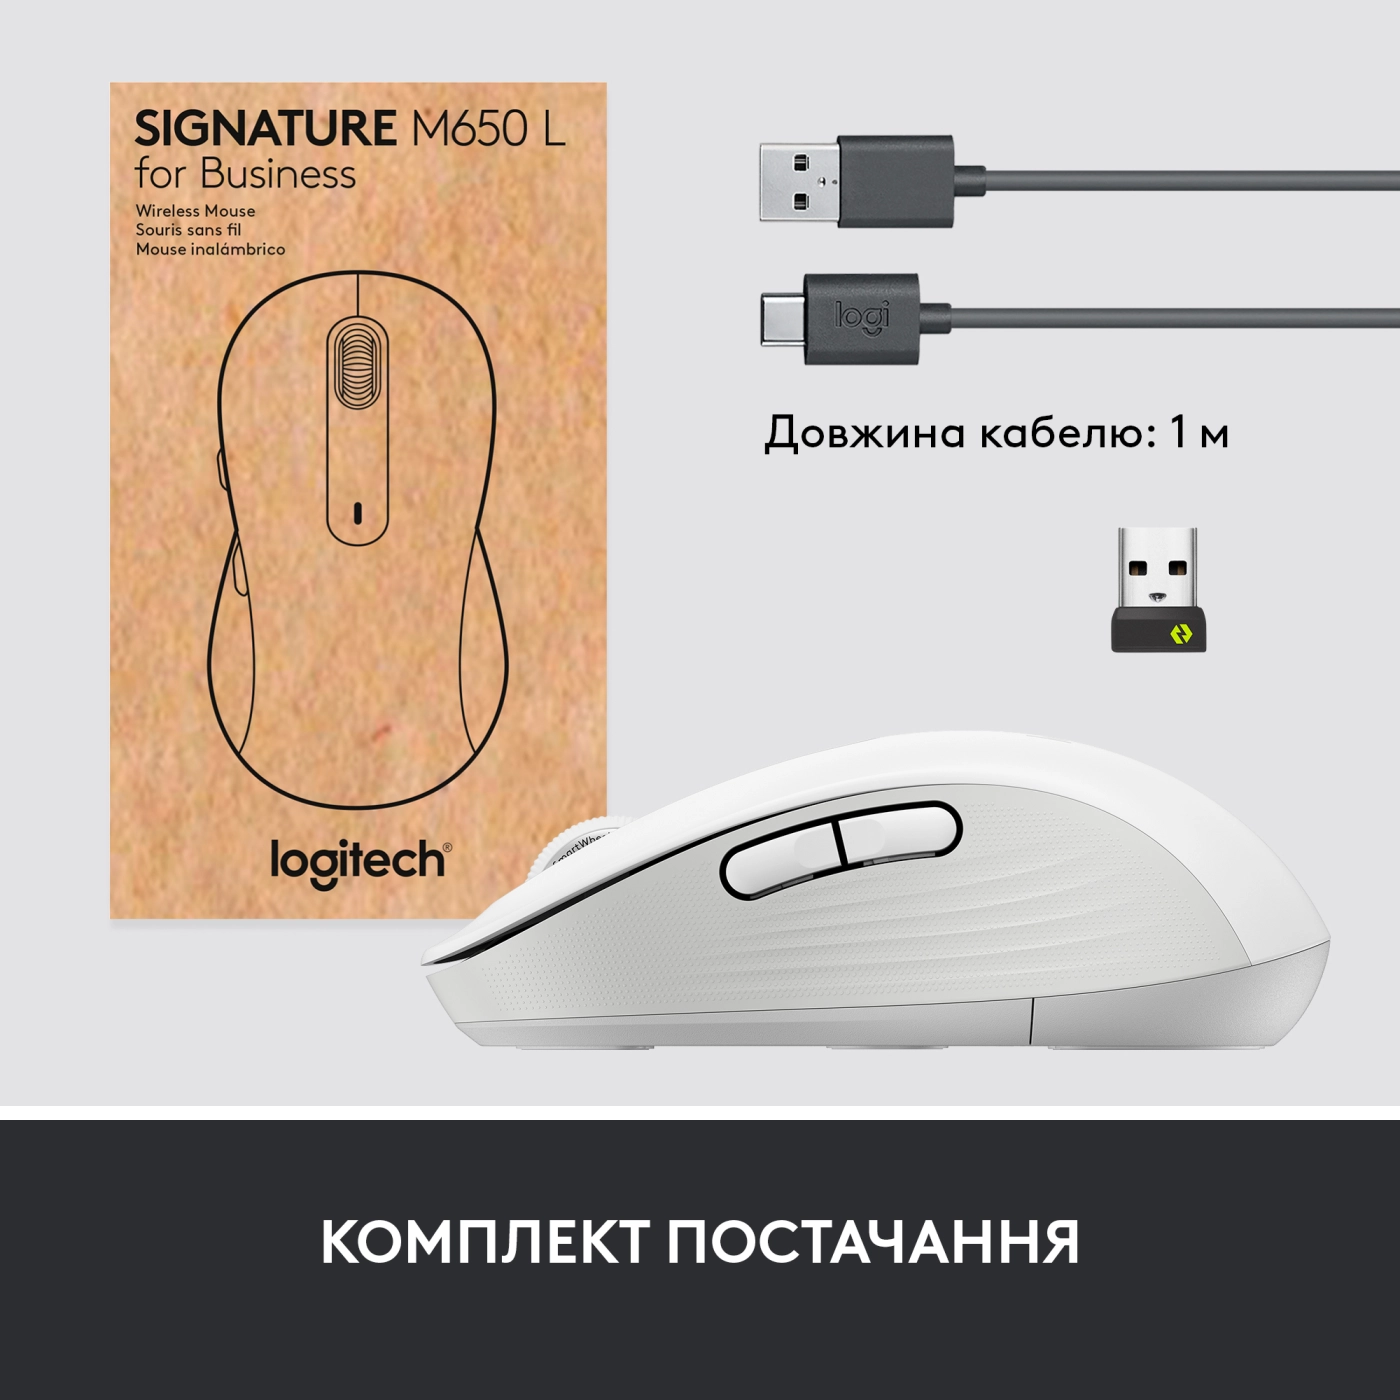 Купить Мышь Logitech Signature M650 L Wireless Mouse for Business off-white BT (910-006349) - фото 9